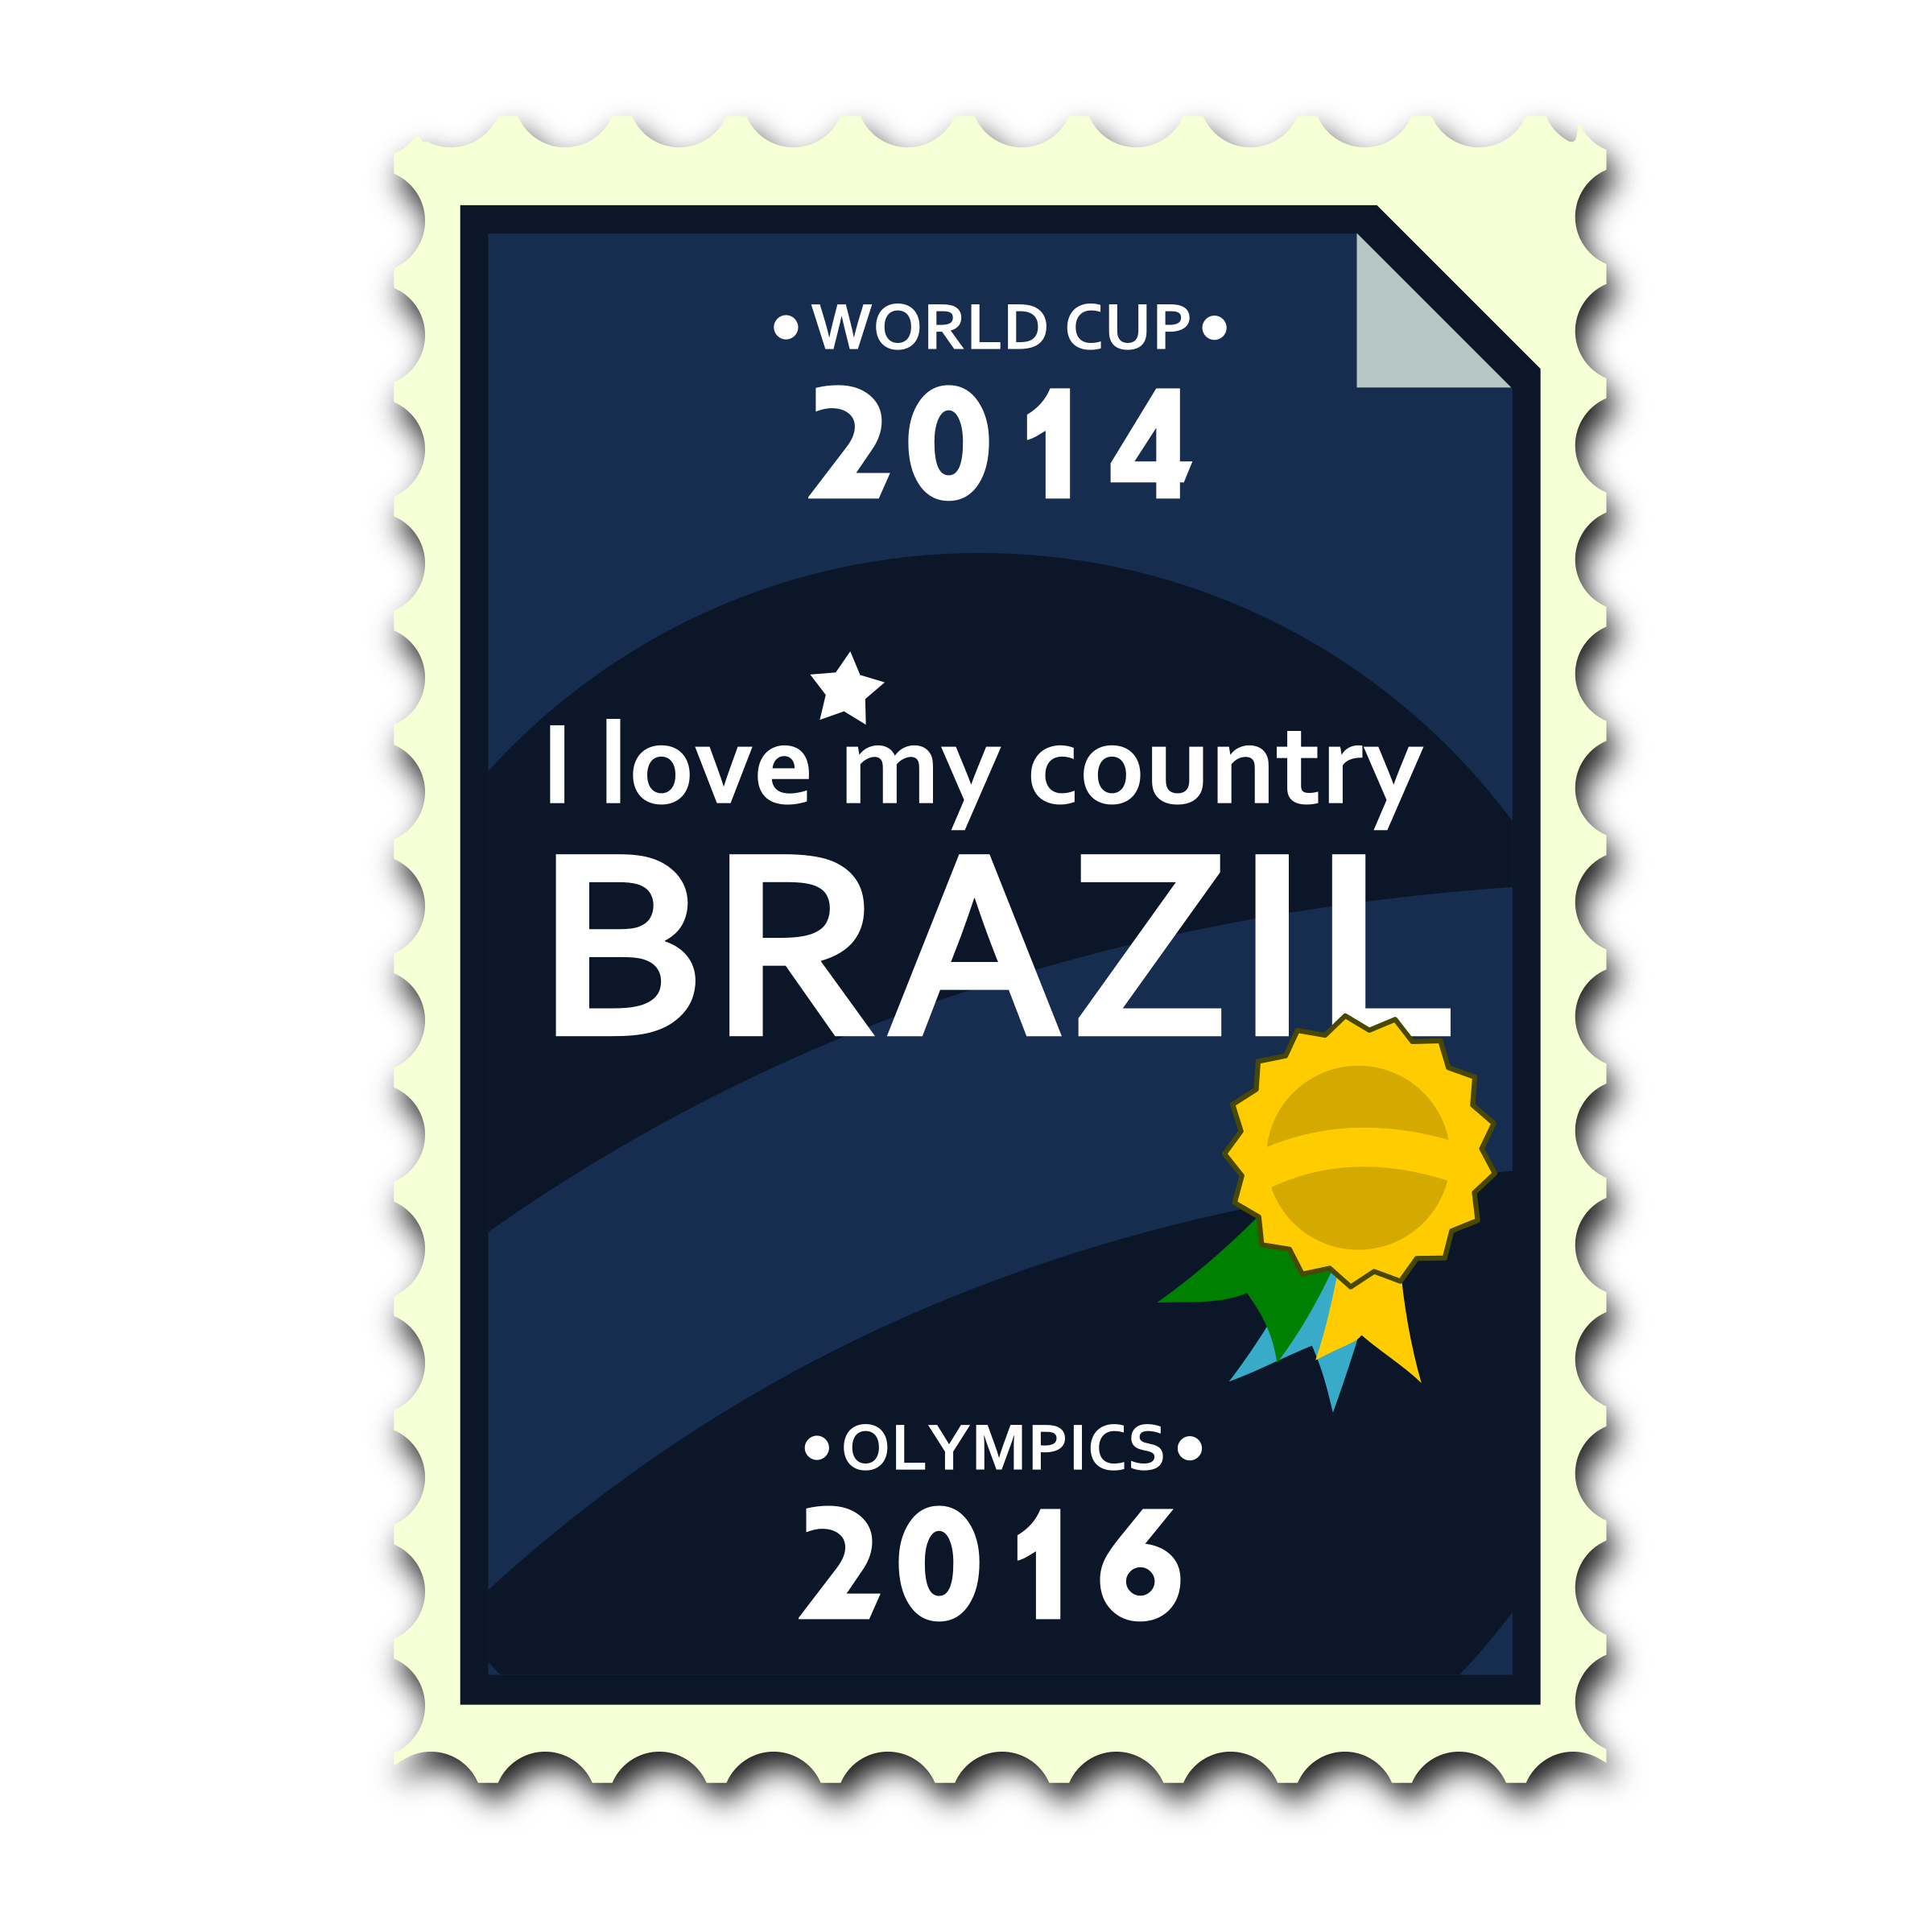 Brazil big image png. Stamp clipart postage stamp